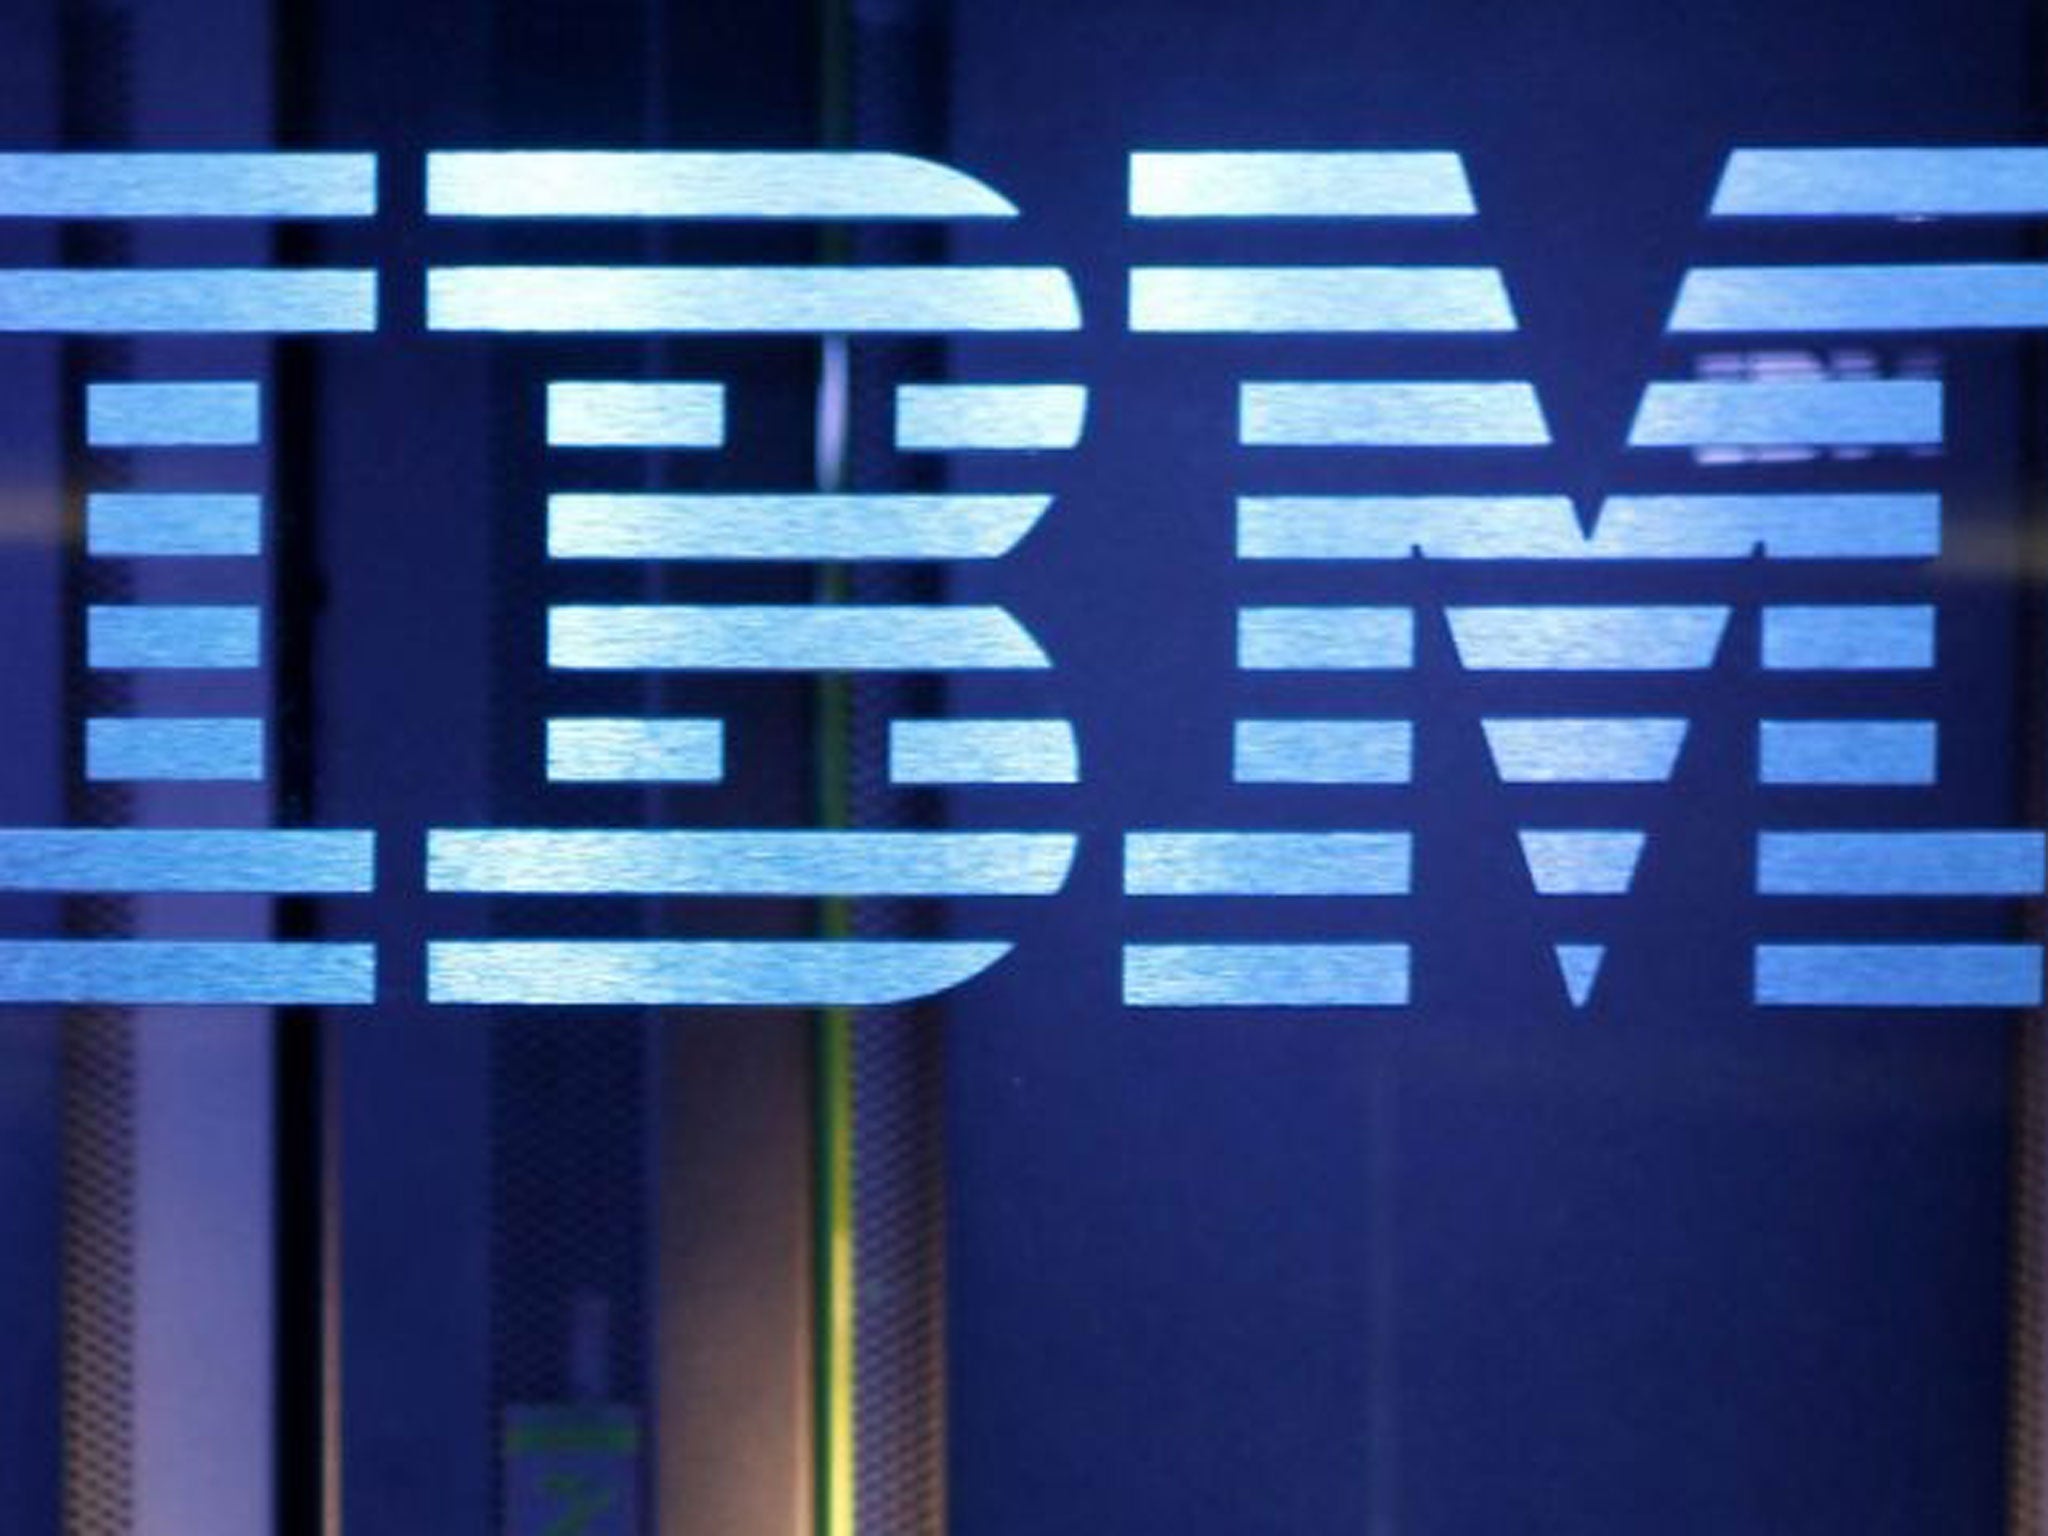 The IBM logo in Yorktown Heights, New York